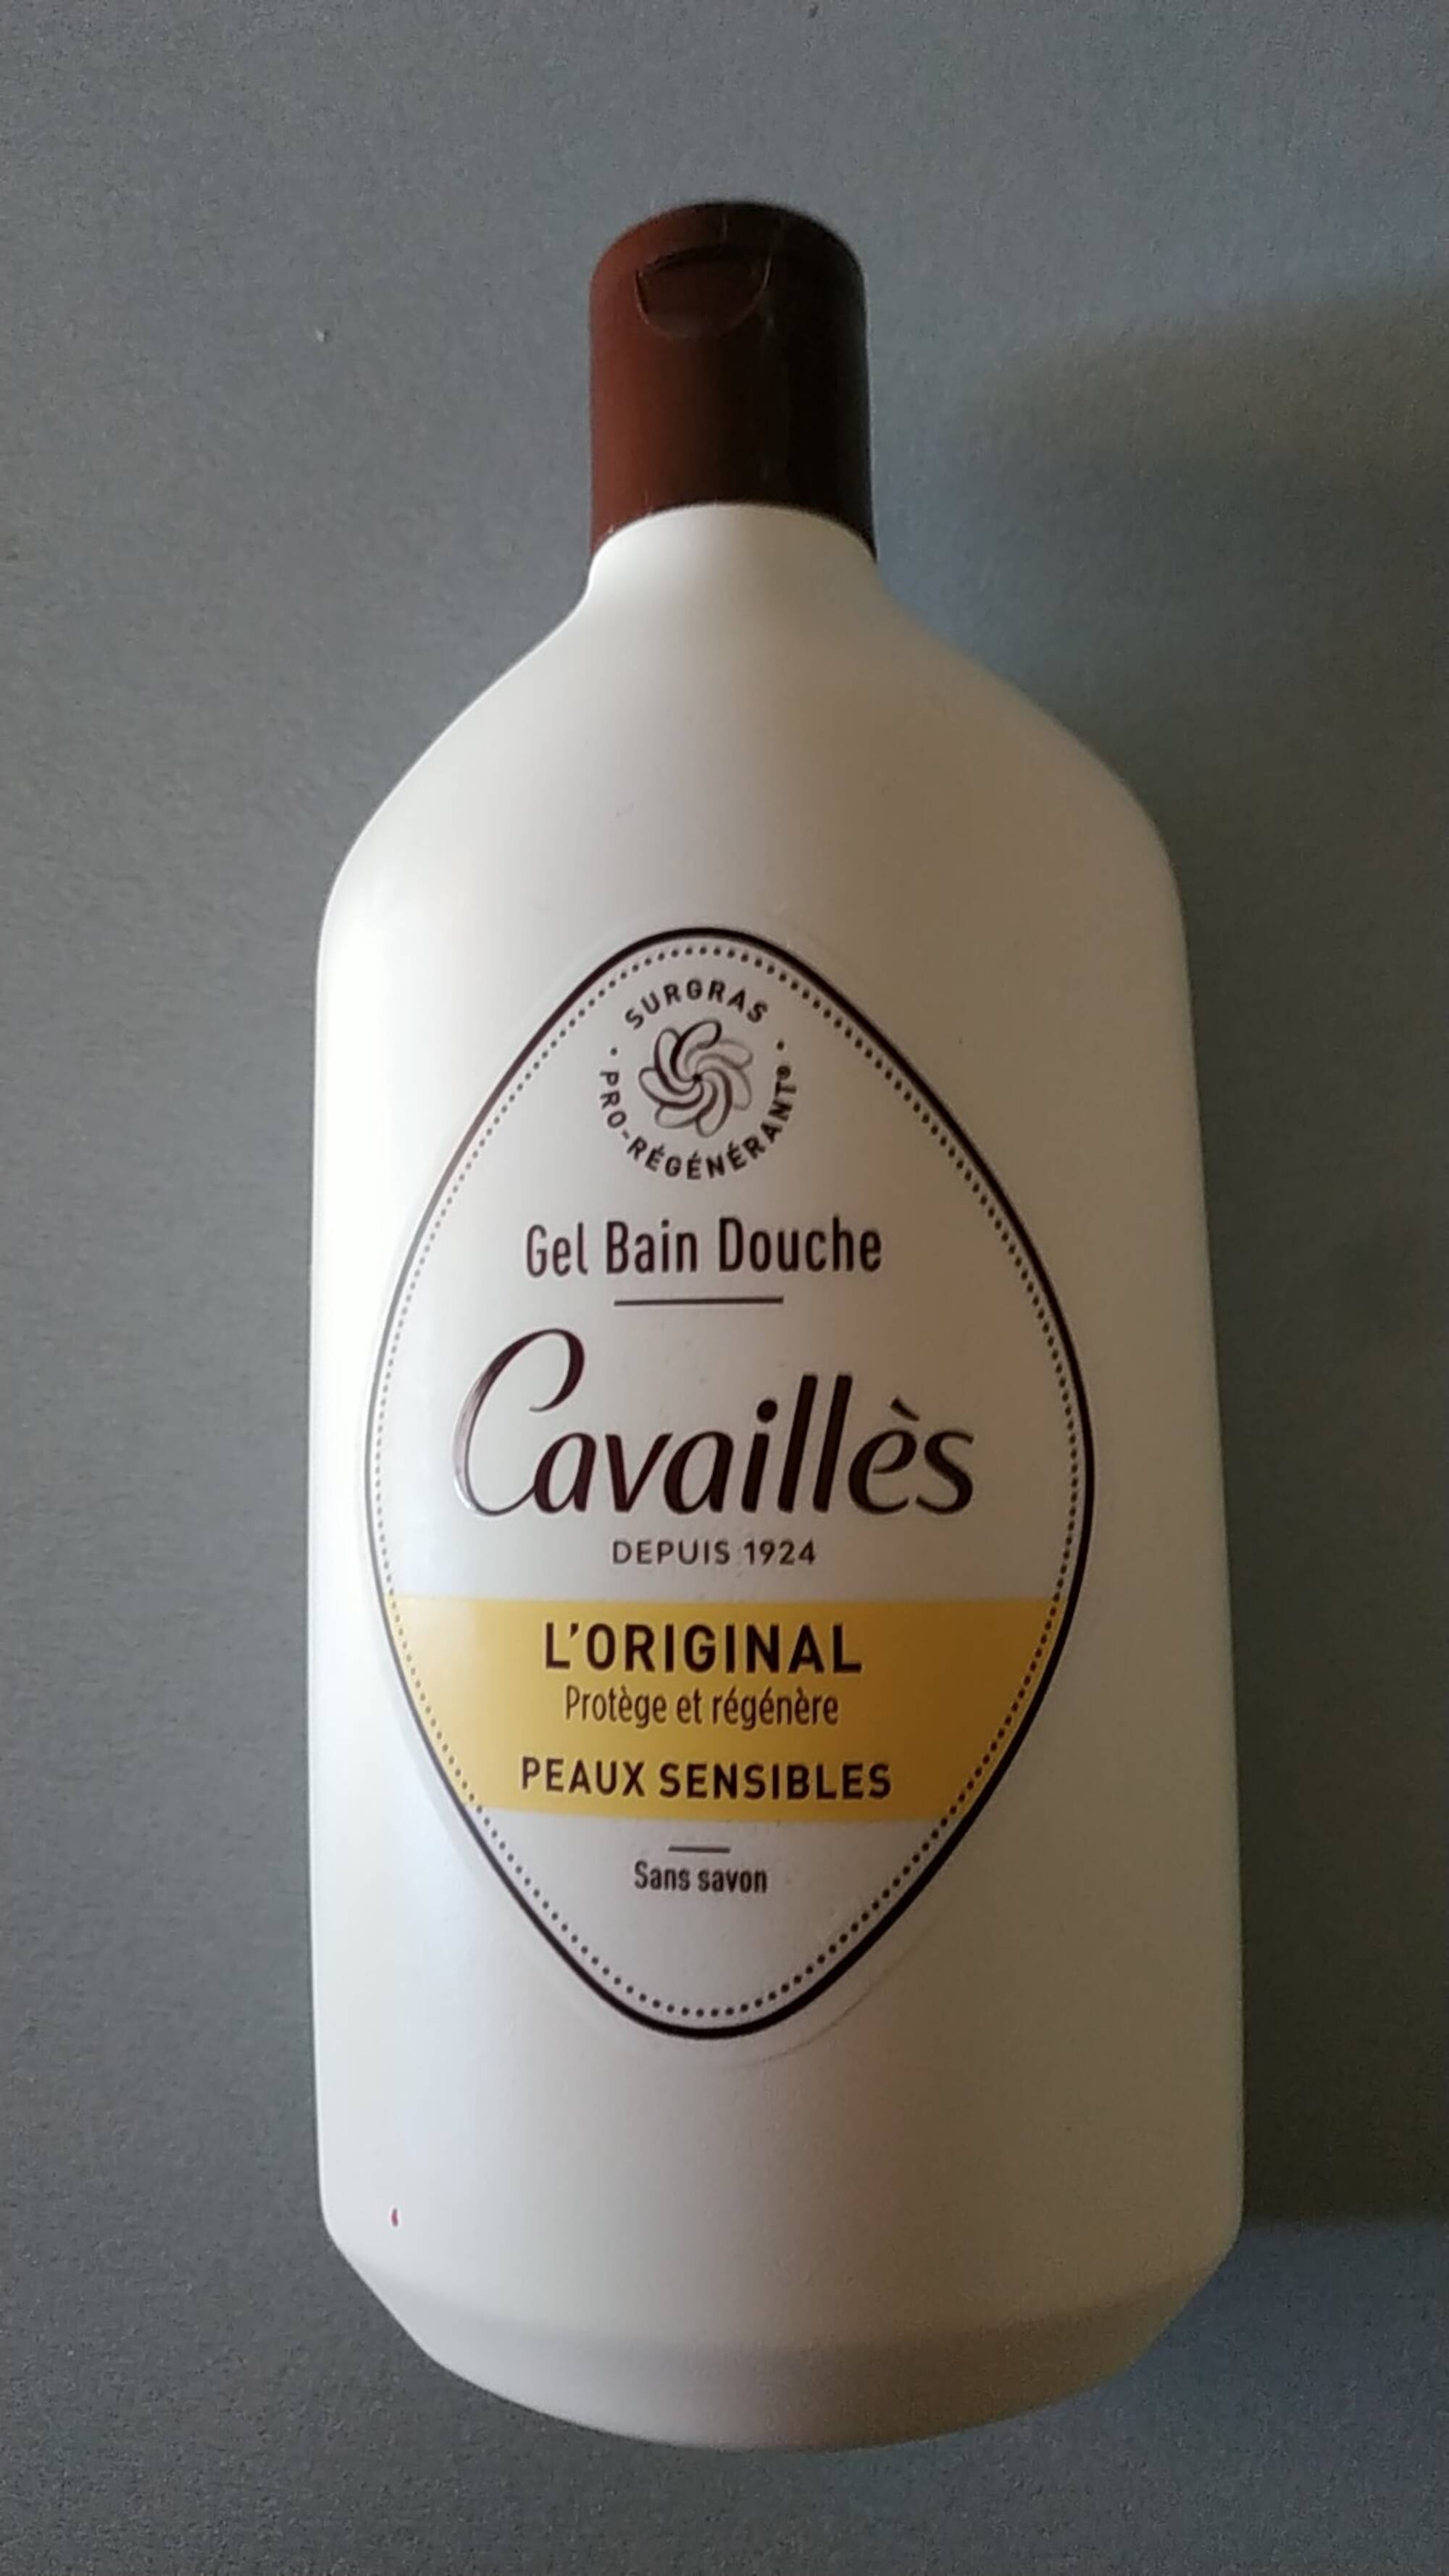 CAVAILLES - L'original - Gel bain douche 